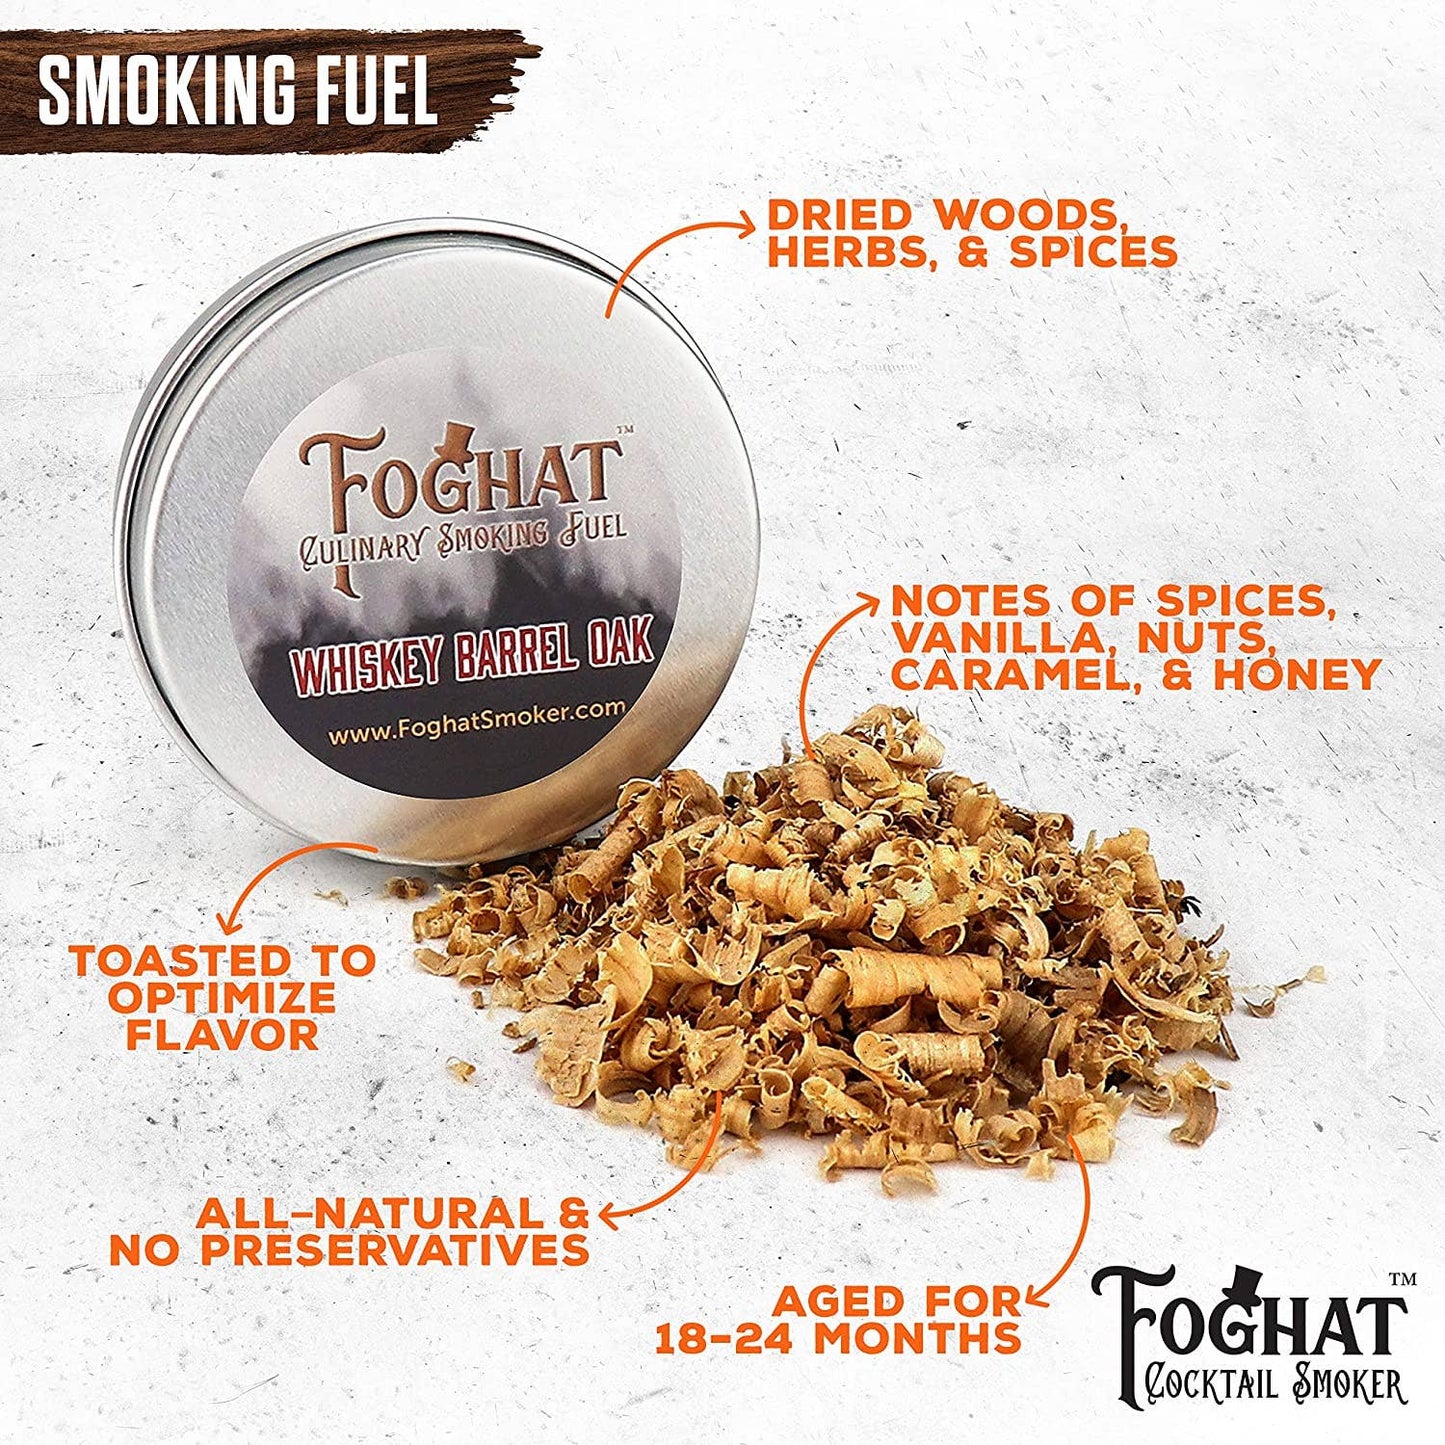 Foghat Cocktail Smoker™ Materials